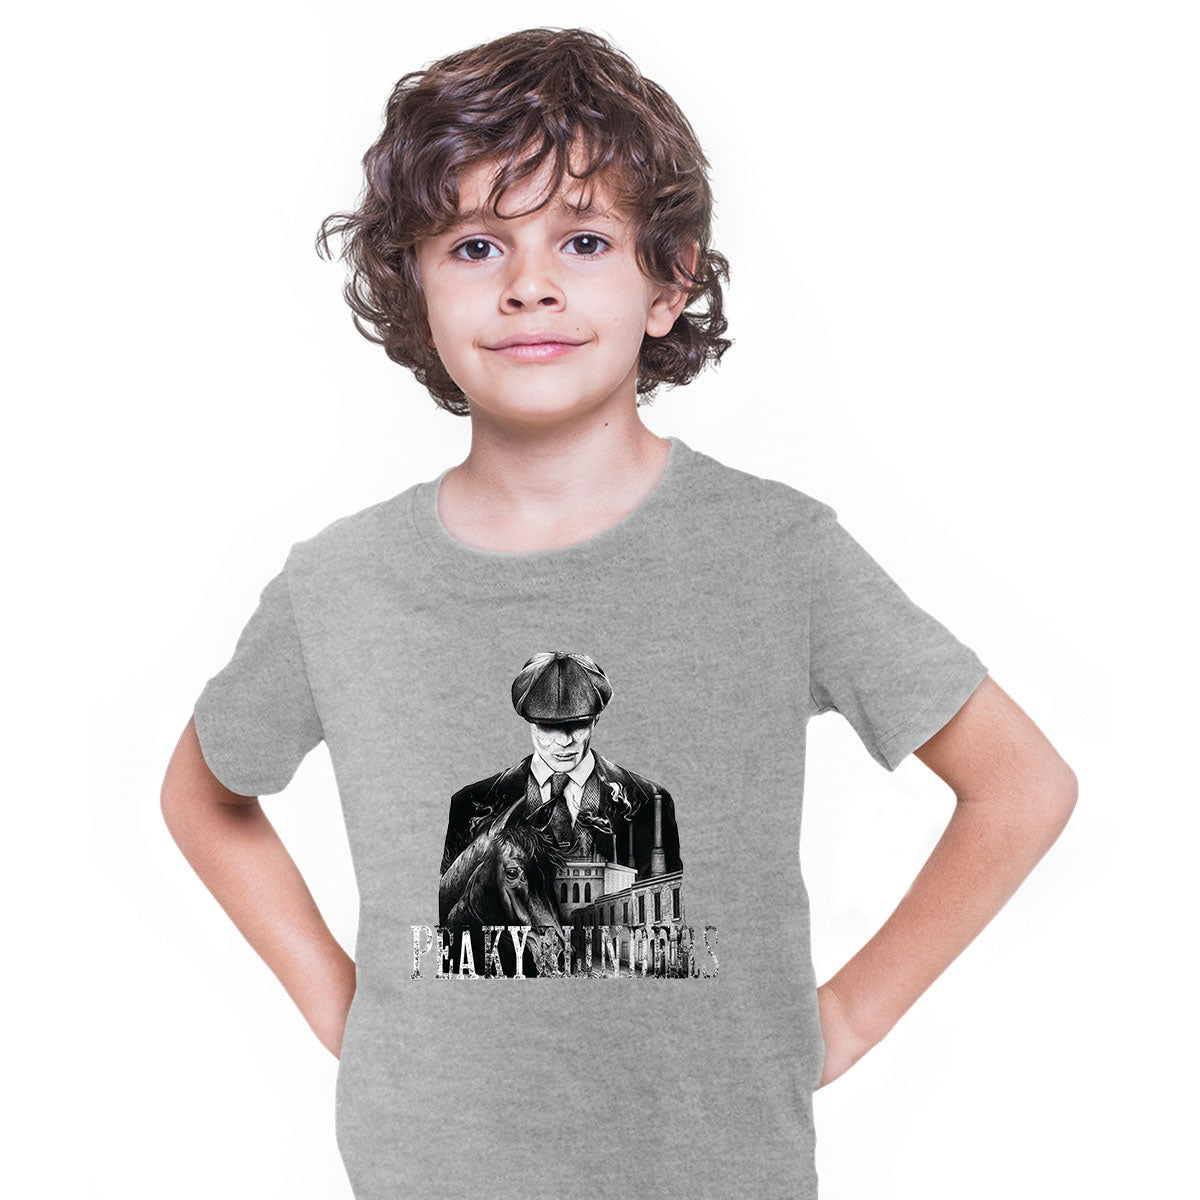 This Peaky Blinders Tommy Shelby Birmingham Kids T-Shirt - Kuzi Tees